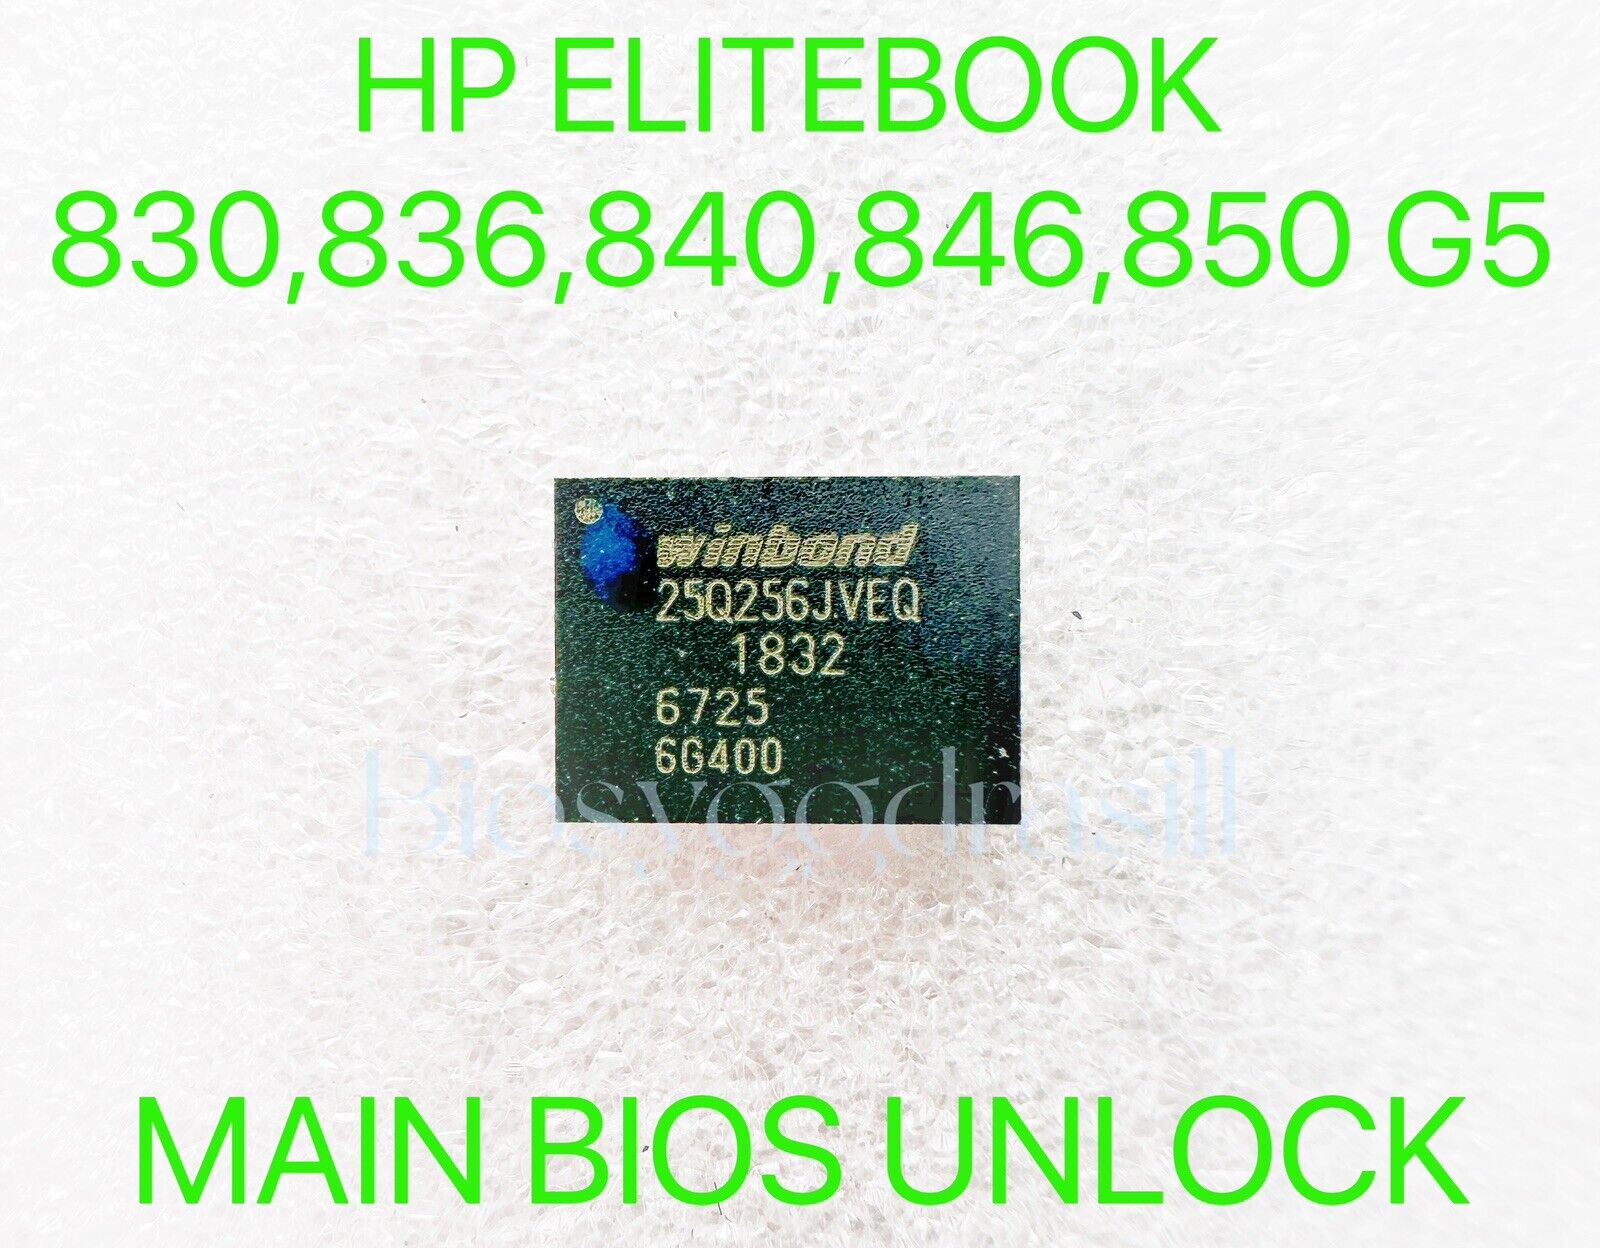 MAIN BIOS PASSWORD UNLOCK CHIP HP ELITEBOOK 830 G5, 836 G5,840 G5,846 G5, 850 G5